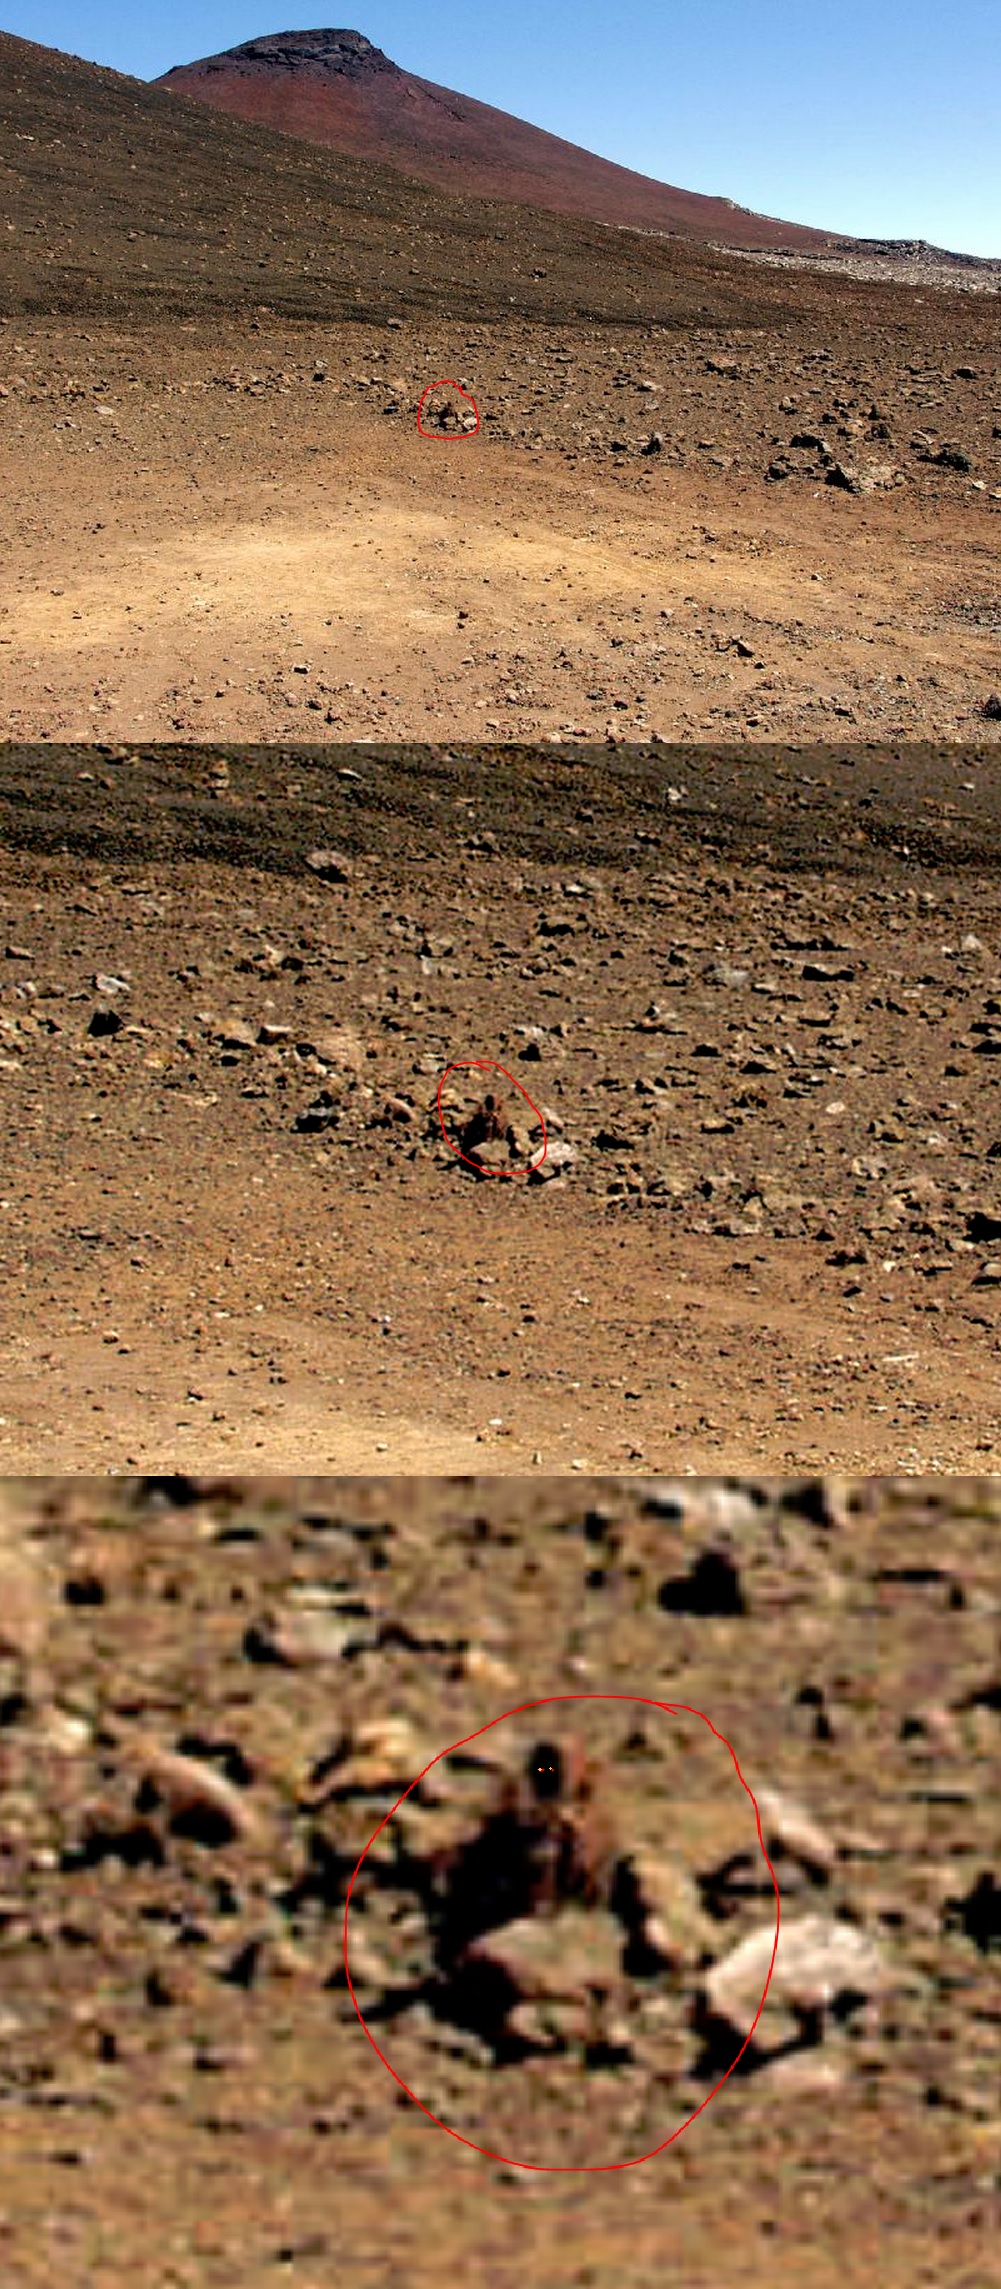 Mars Curiosity Rover Captures Jawa in Image